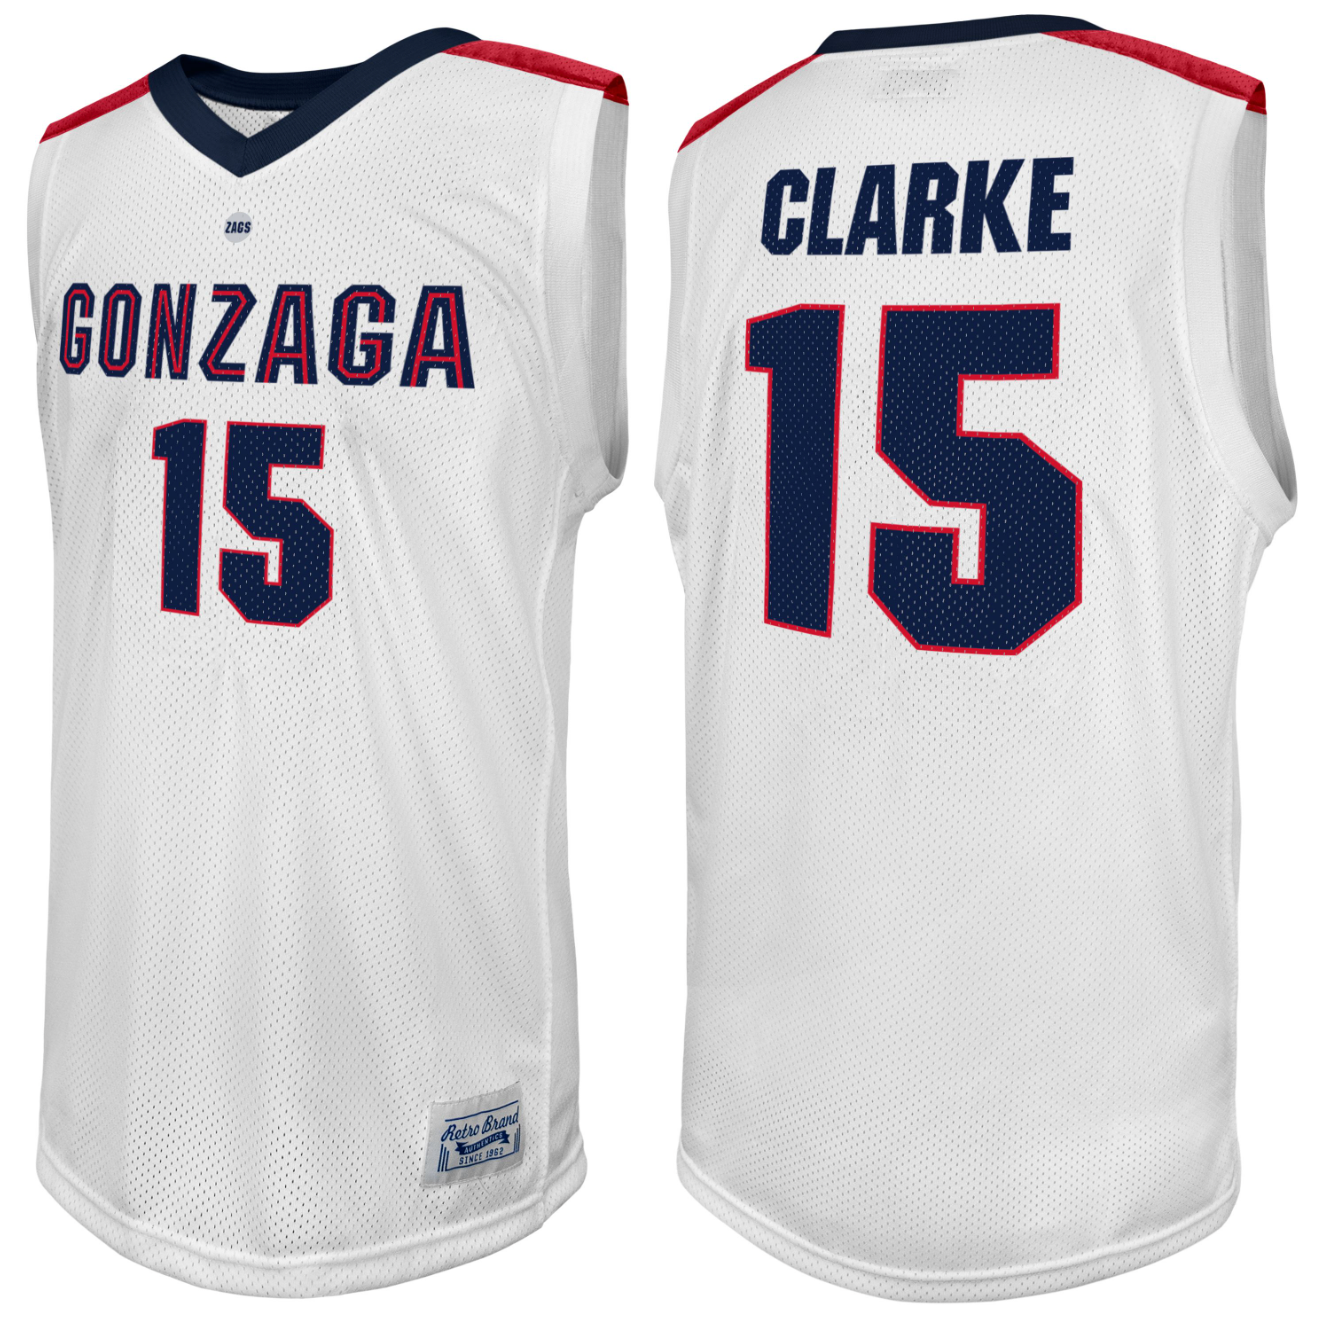 Gonzaga Basketball: 2019 NBA Draft profile on Brandon Clarke